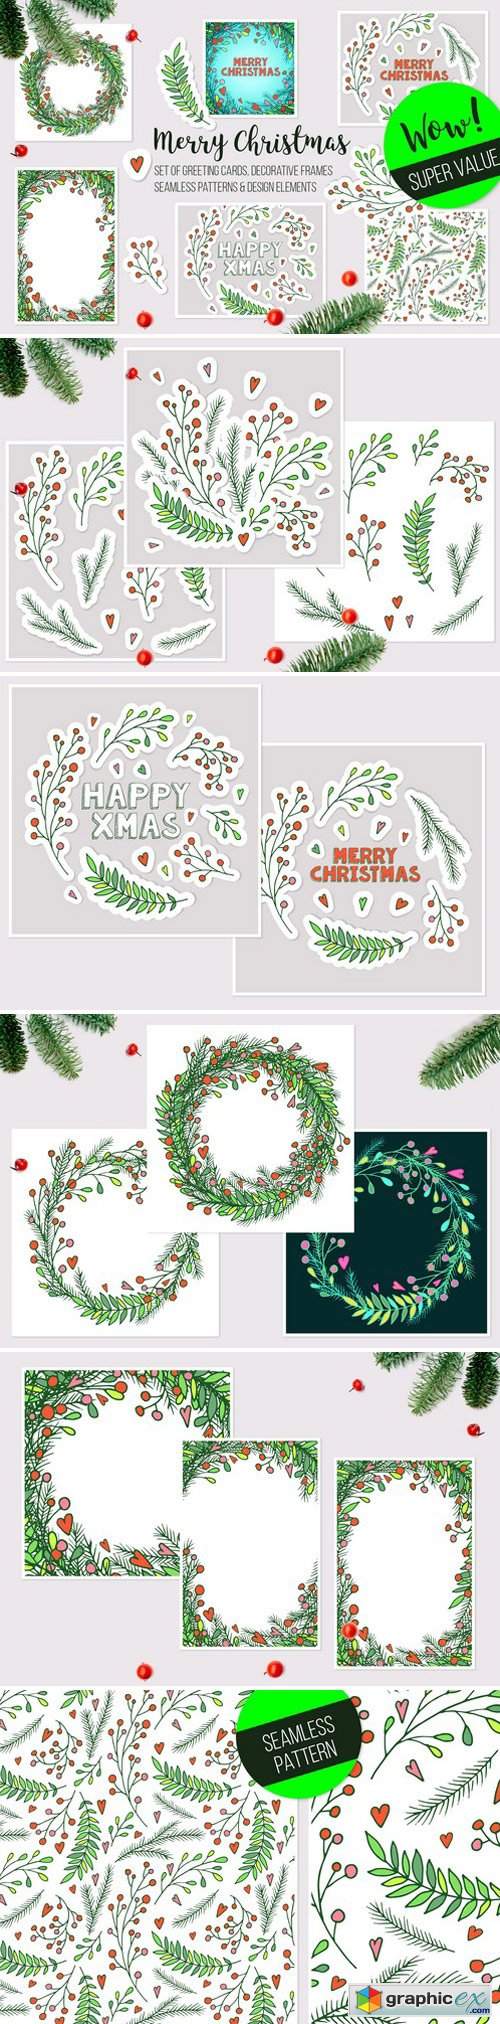 Christmas vector frames, elements